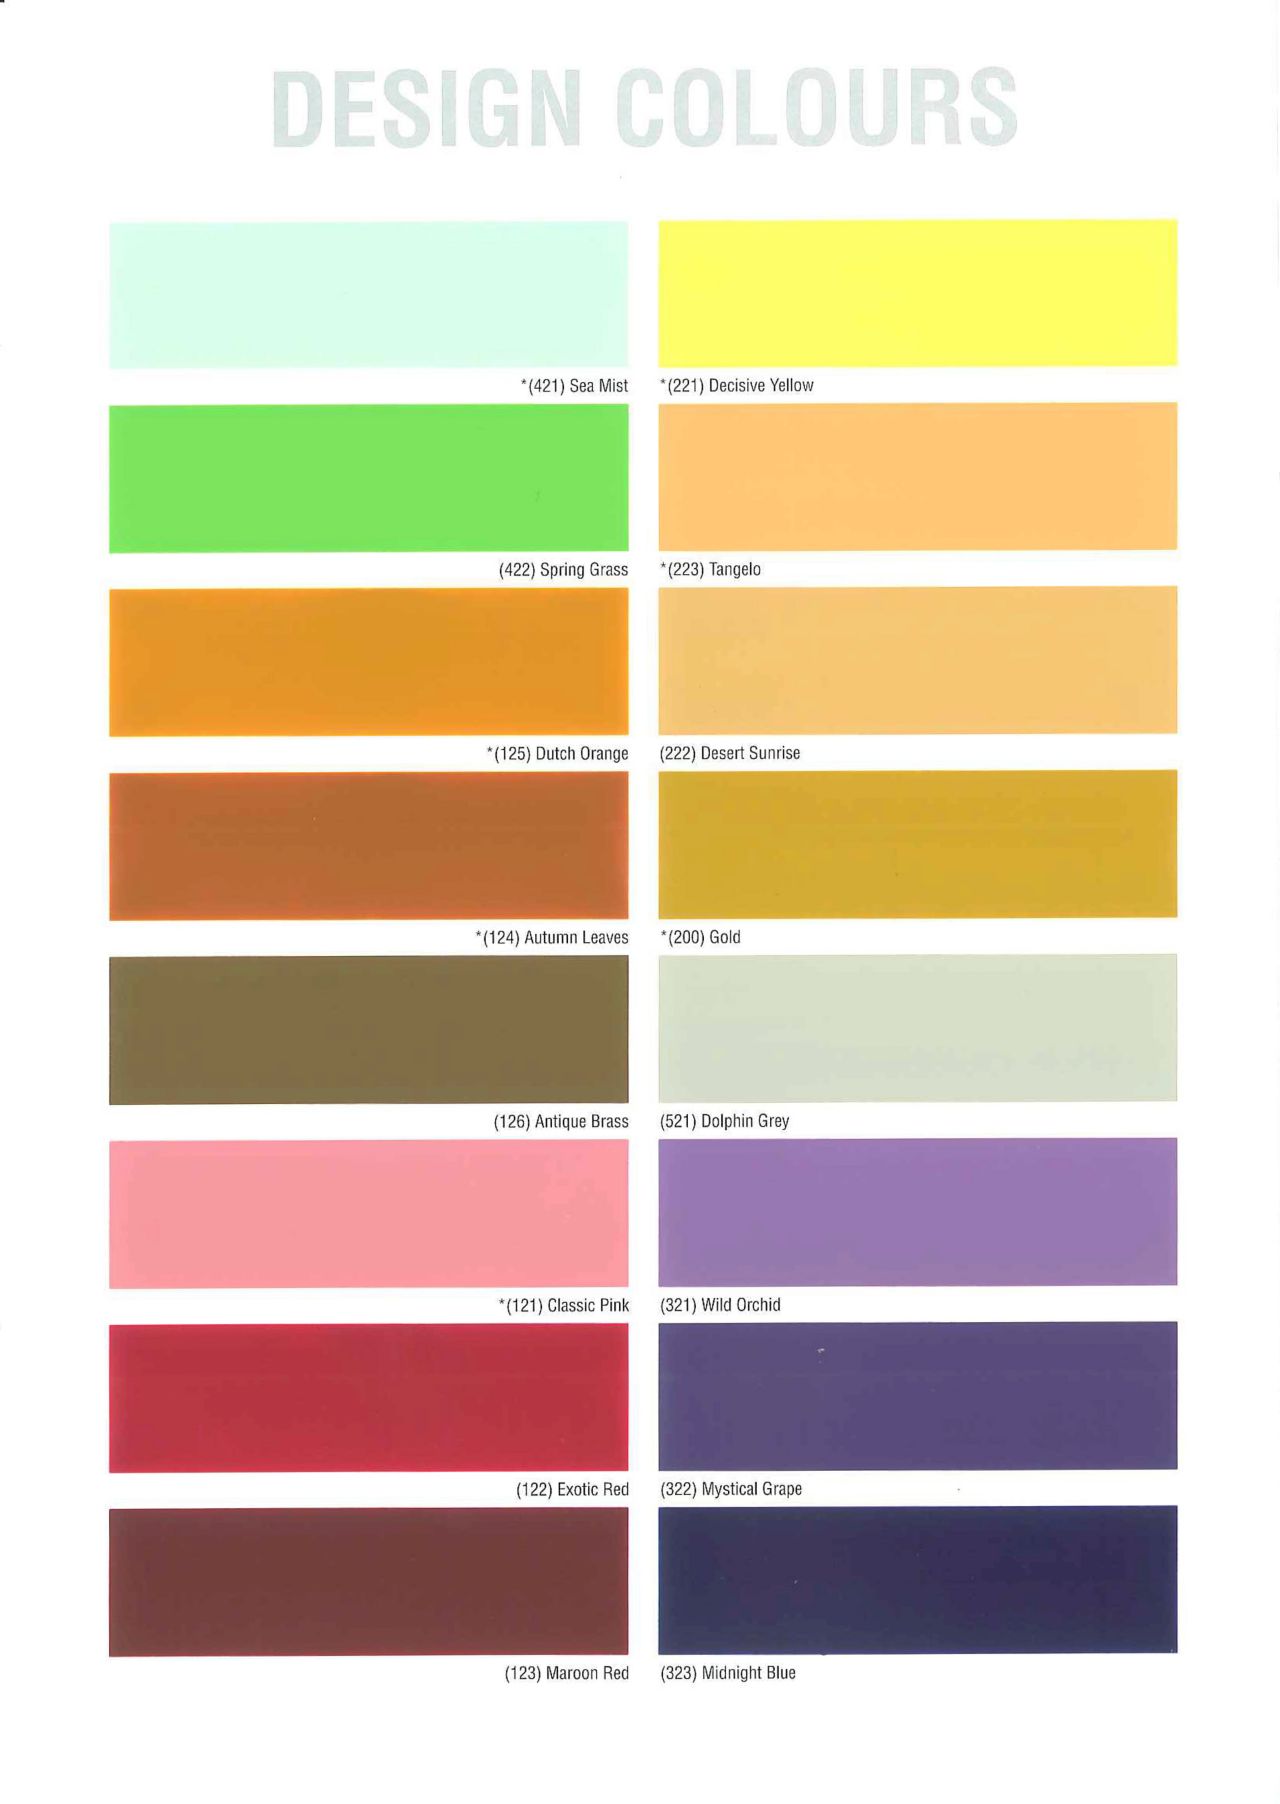 Design colors